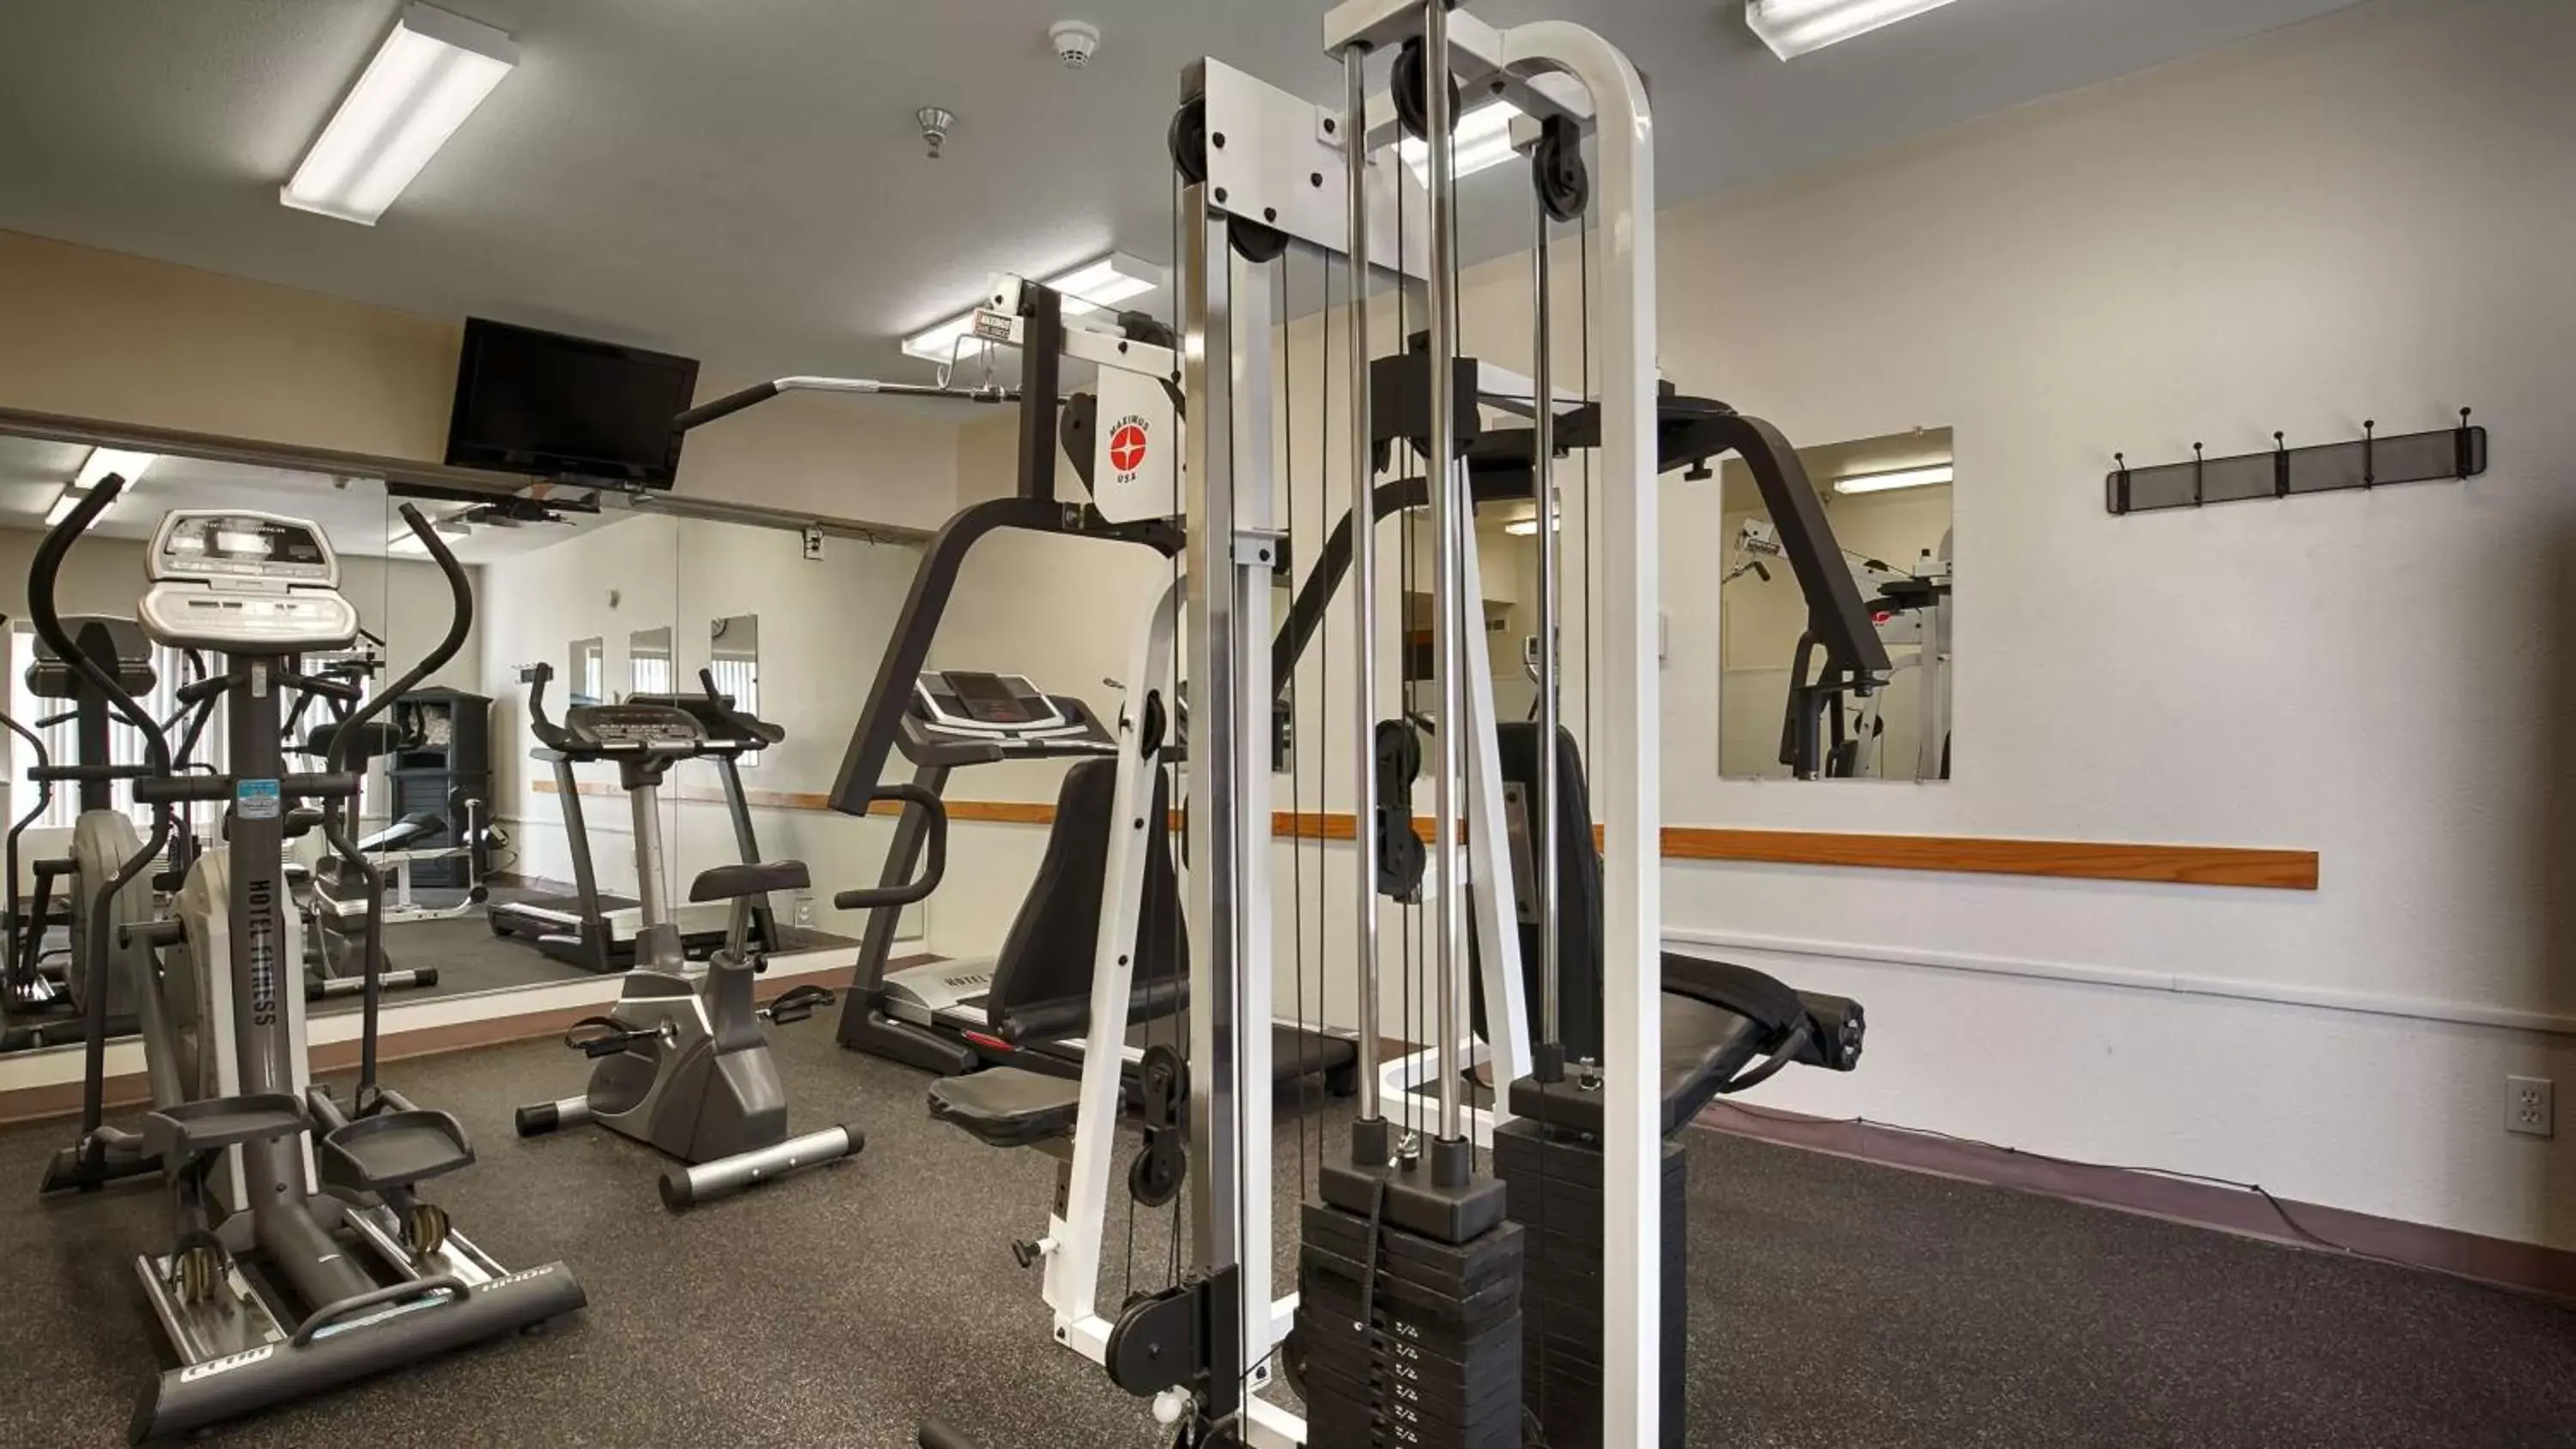 Fitness centre/facilities, Fitness Center/Facilities in Best Western Plus Villa Del Lago Inn